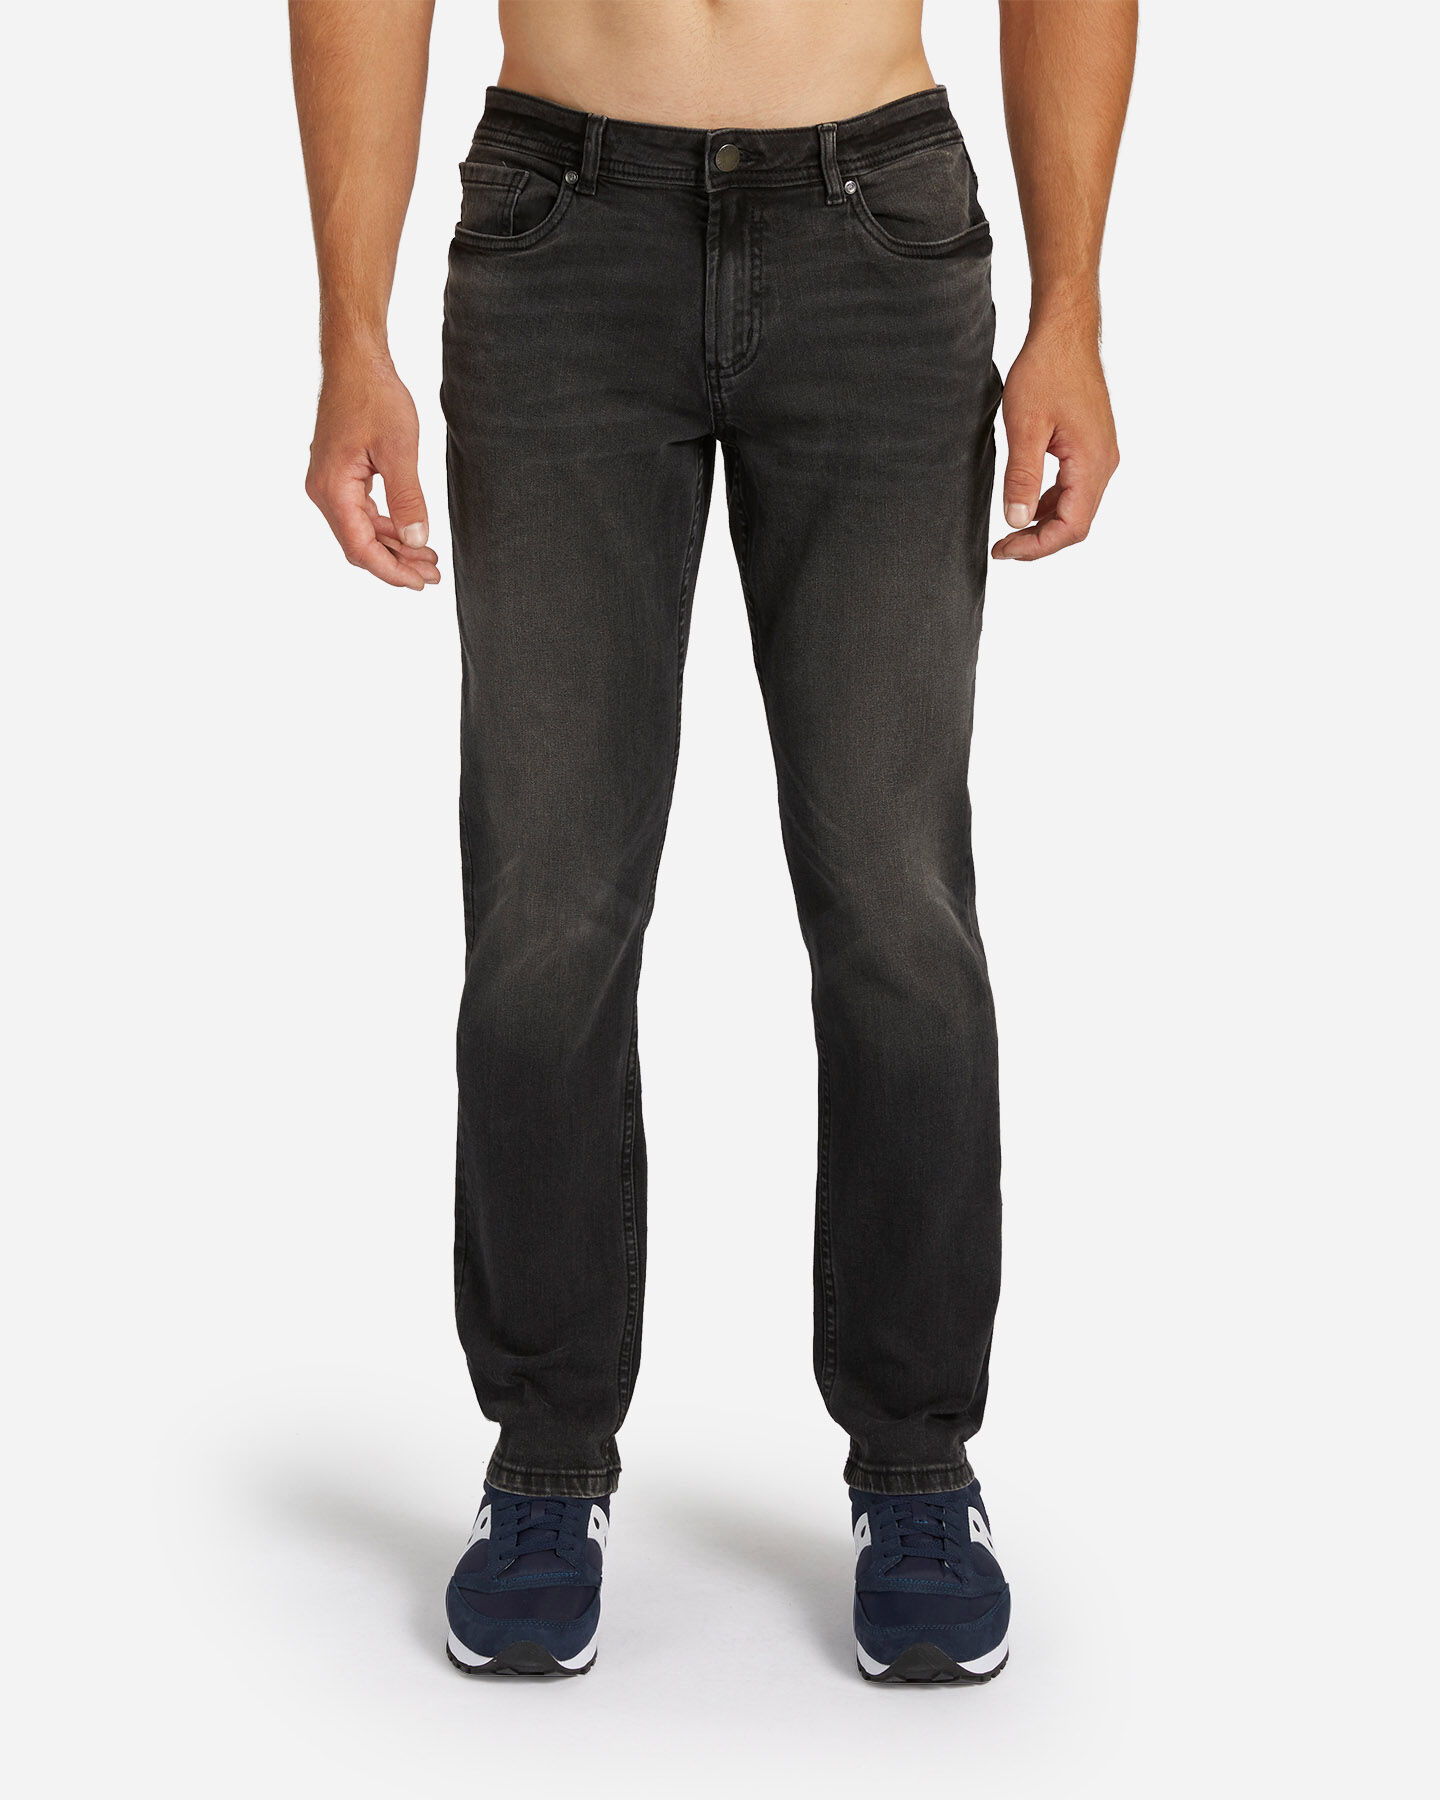  Jeans DACK'S CASUAL CITY M S4106792|DD|42 scatto 0